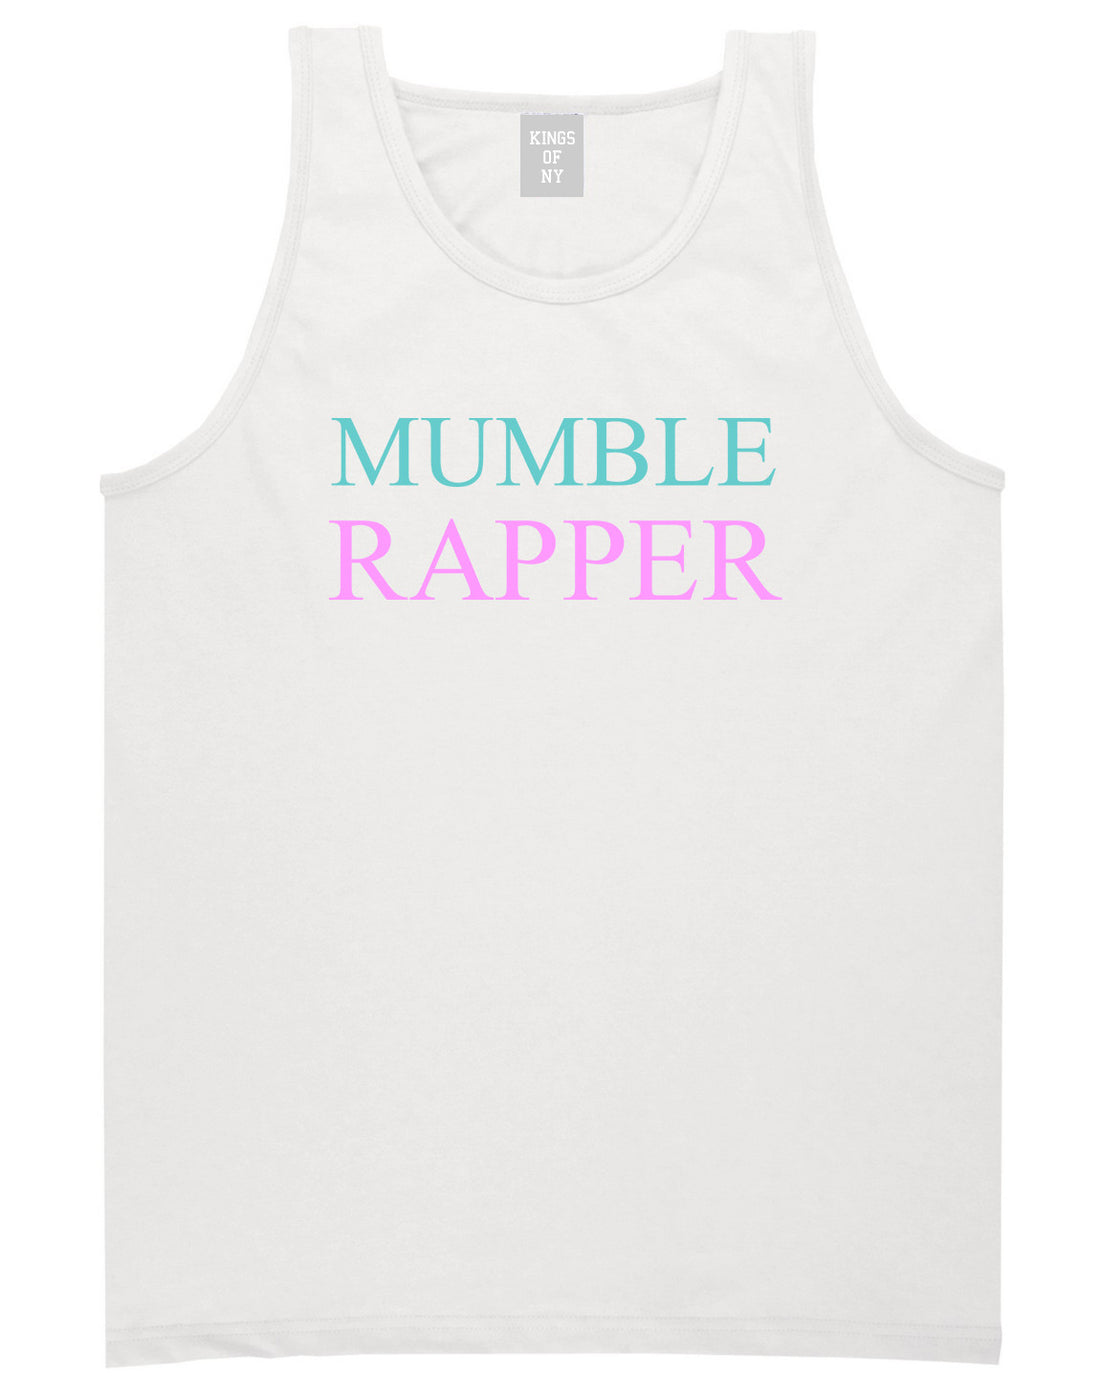 Mumble Rapper Tank Top in White